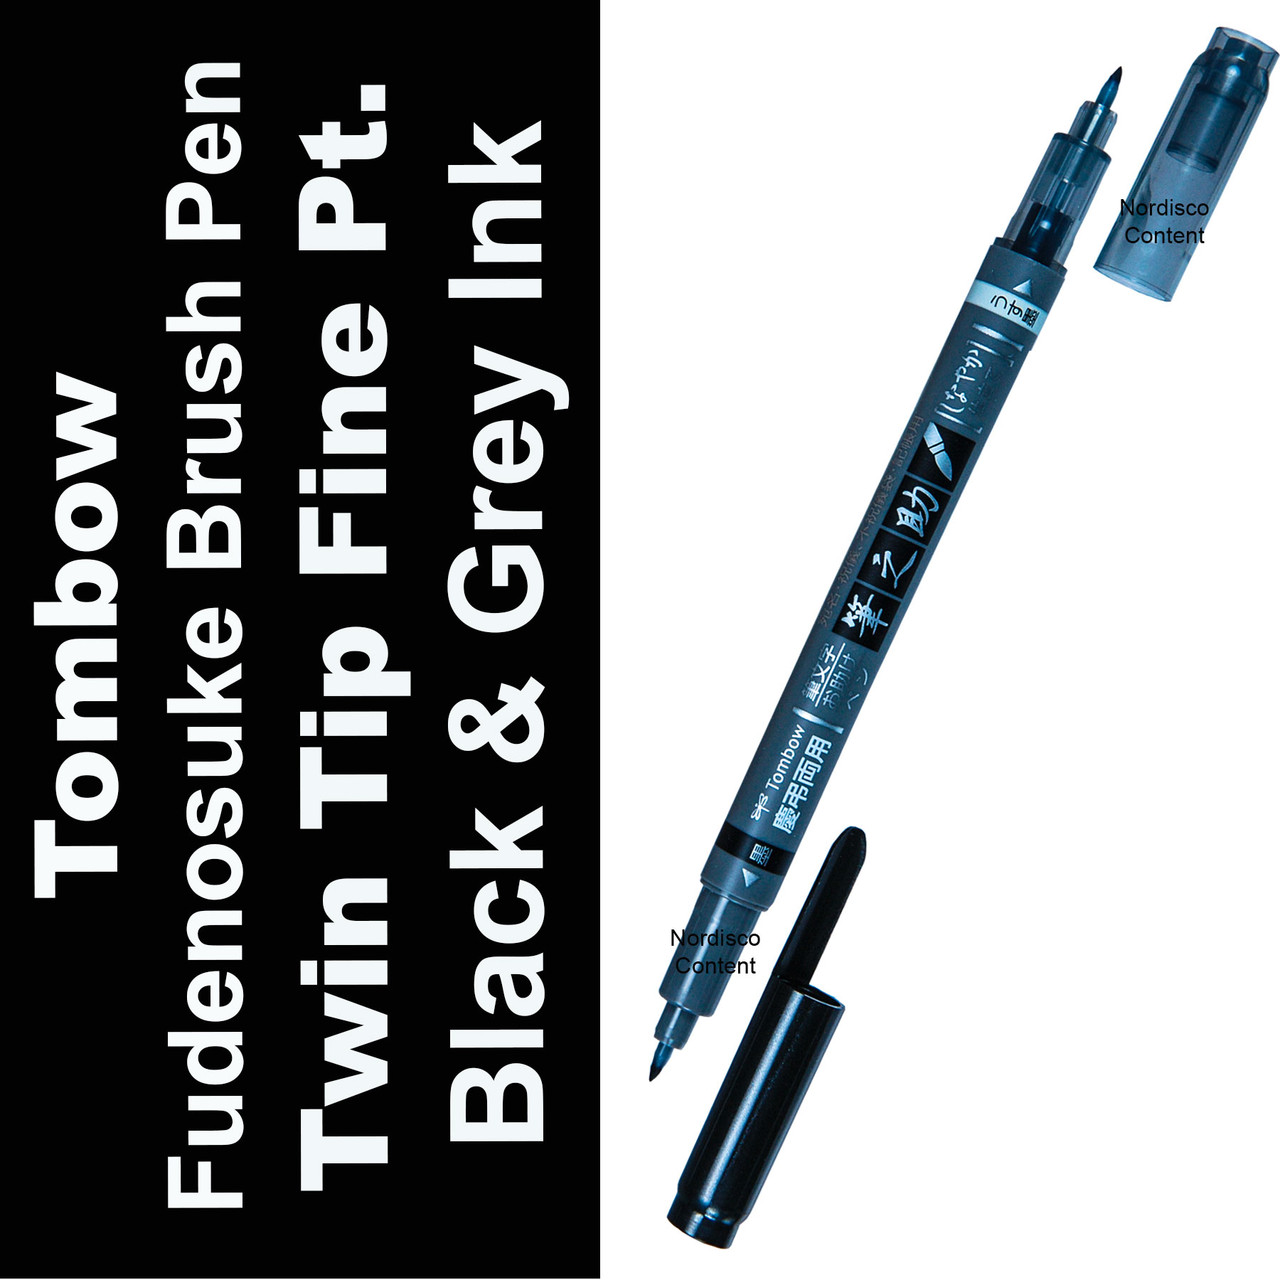 Tombow Fudenosuke Brush Pen GCD-121, Twin Tip, Fine, Black and